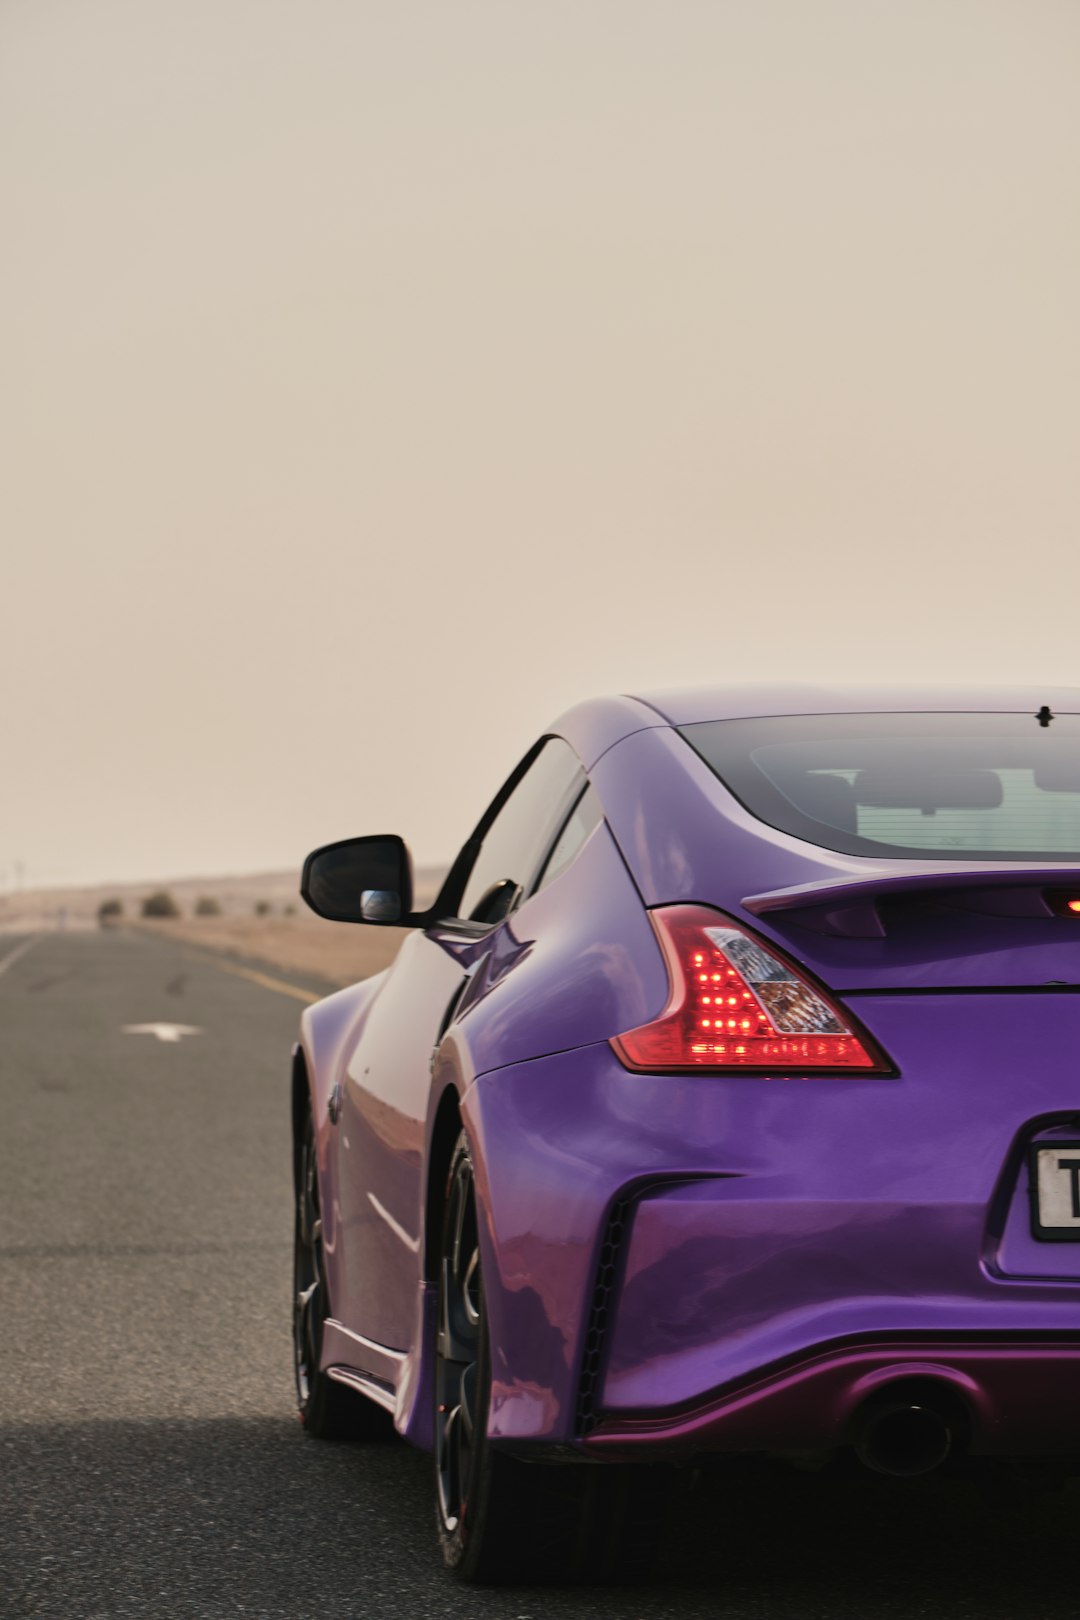 purple car on gray asphalt road during daytime